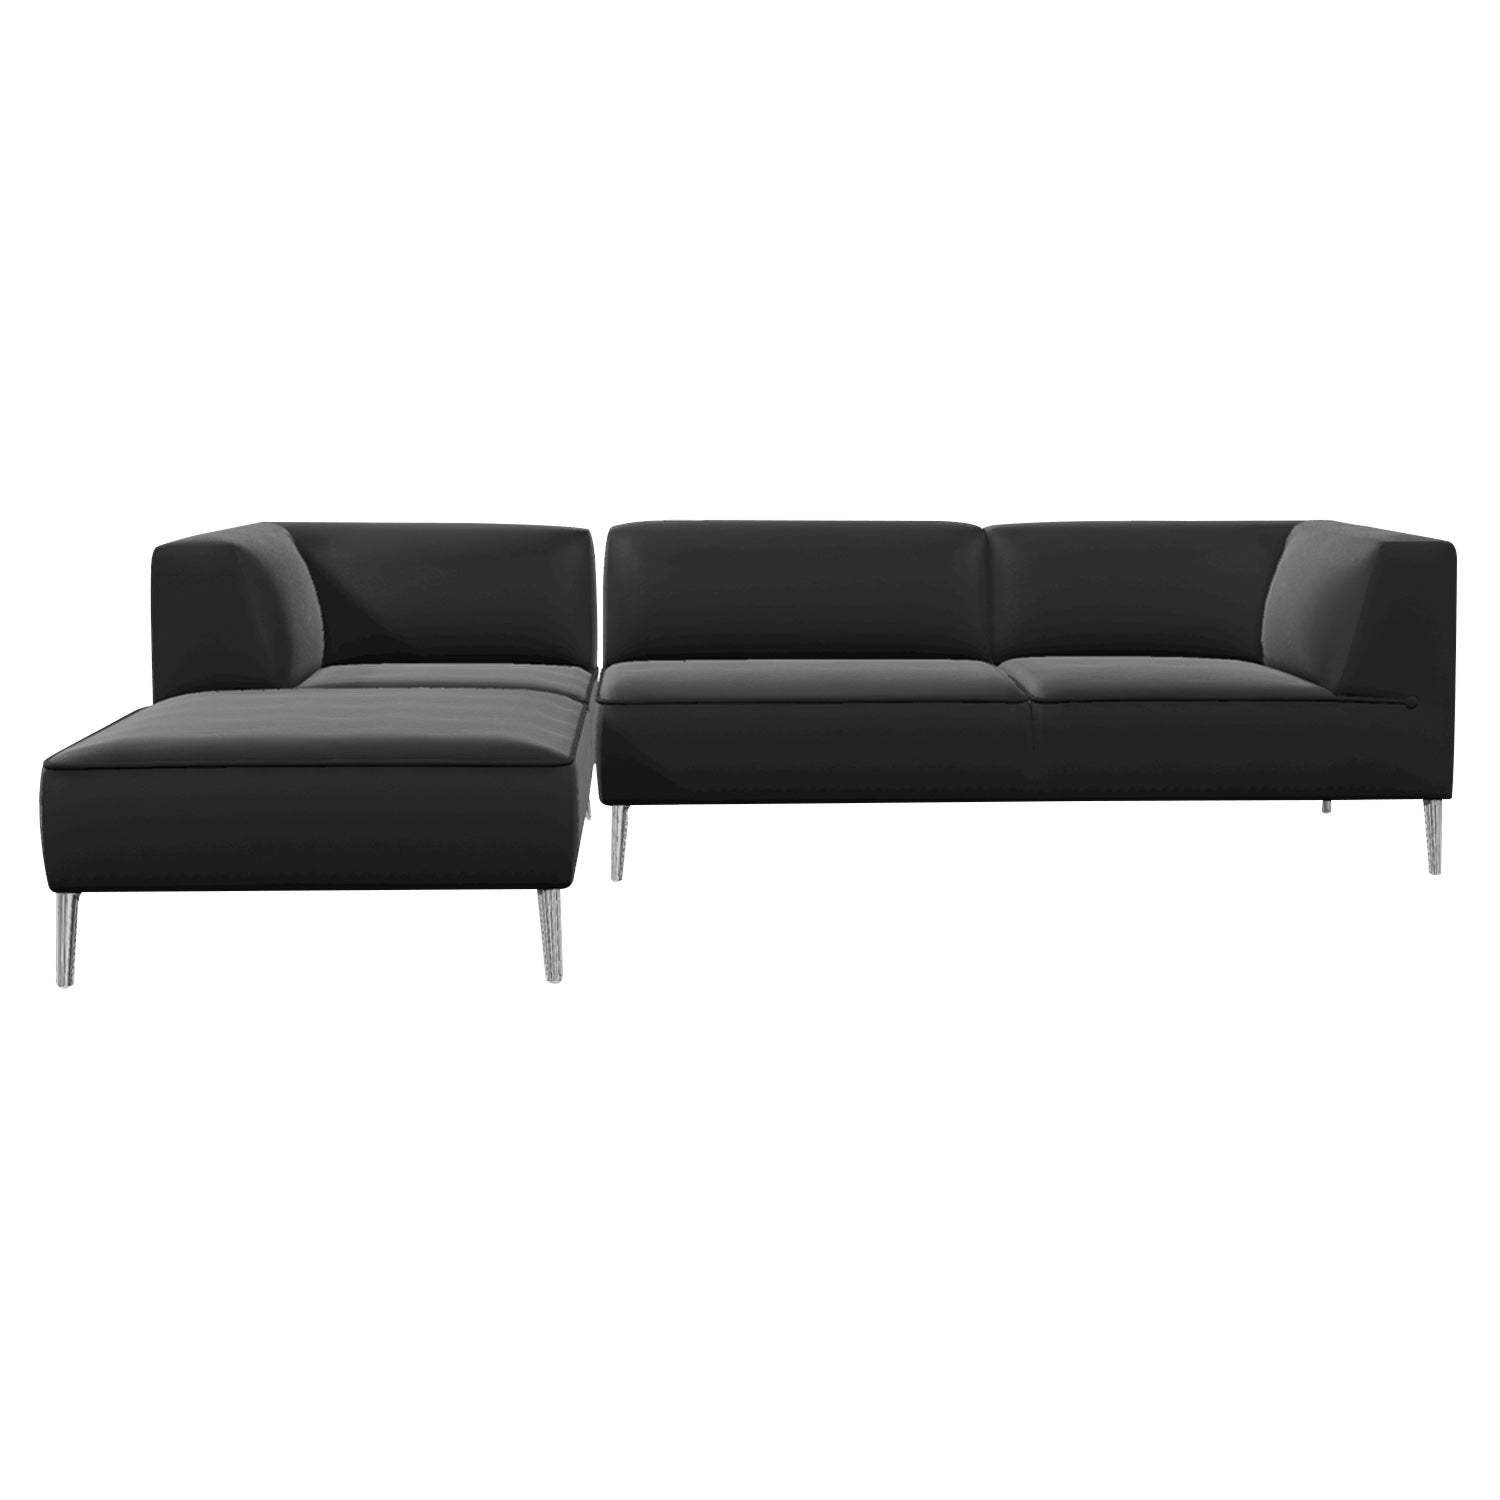 Sofa So Good Modular Sofa: Configuration 1